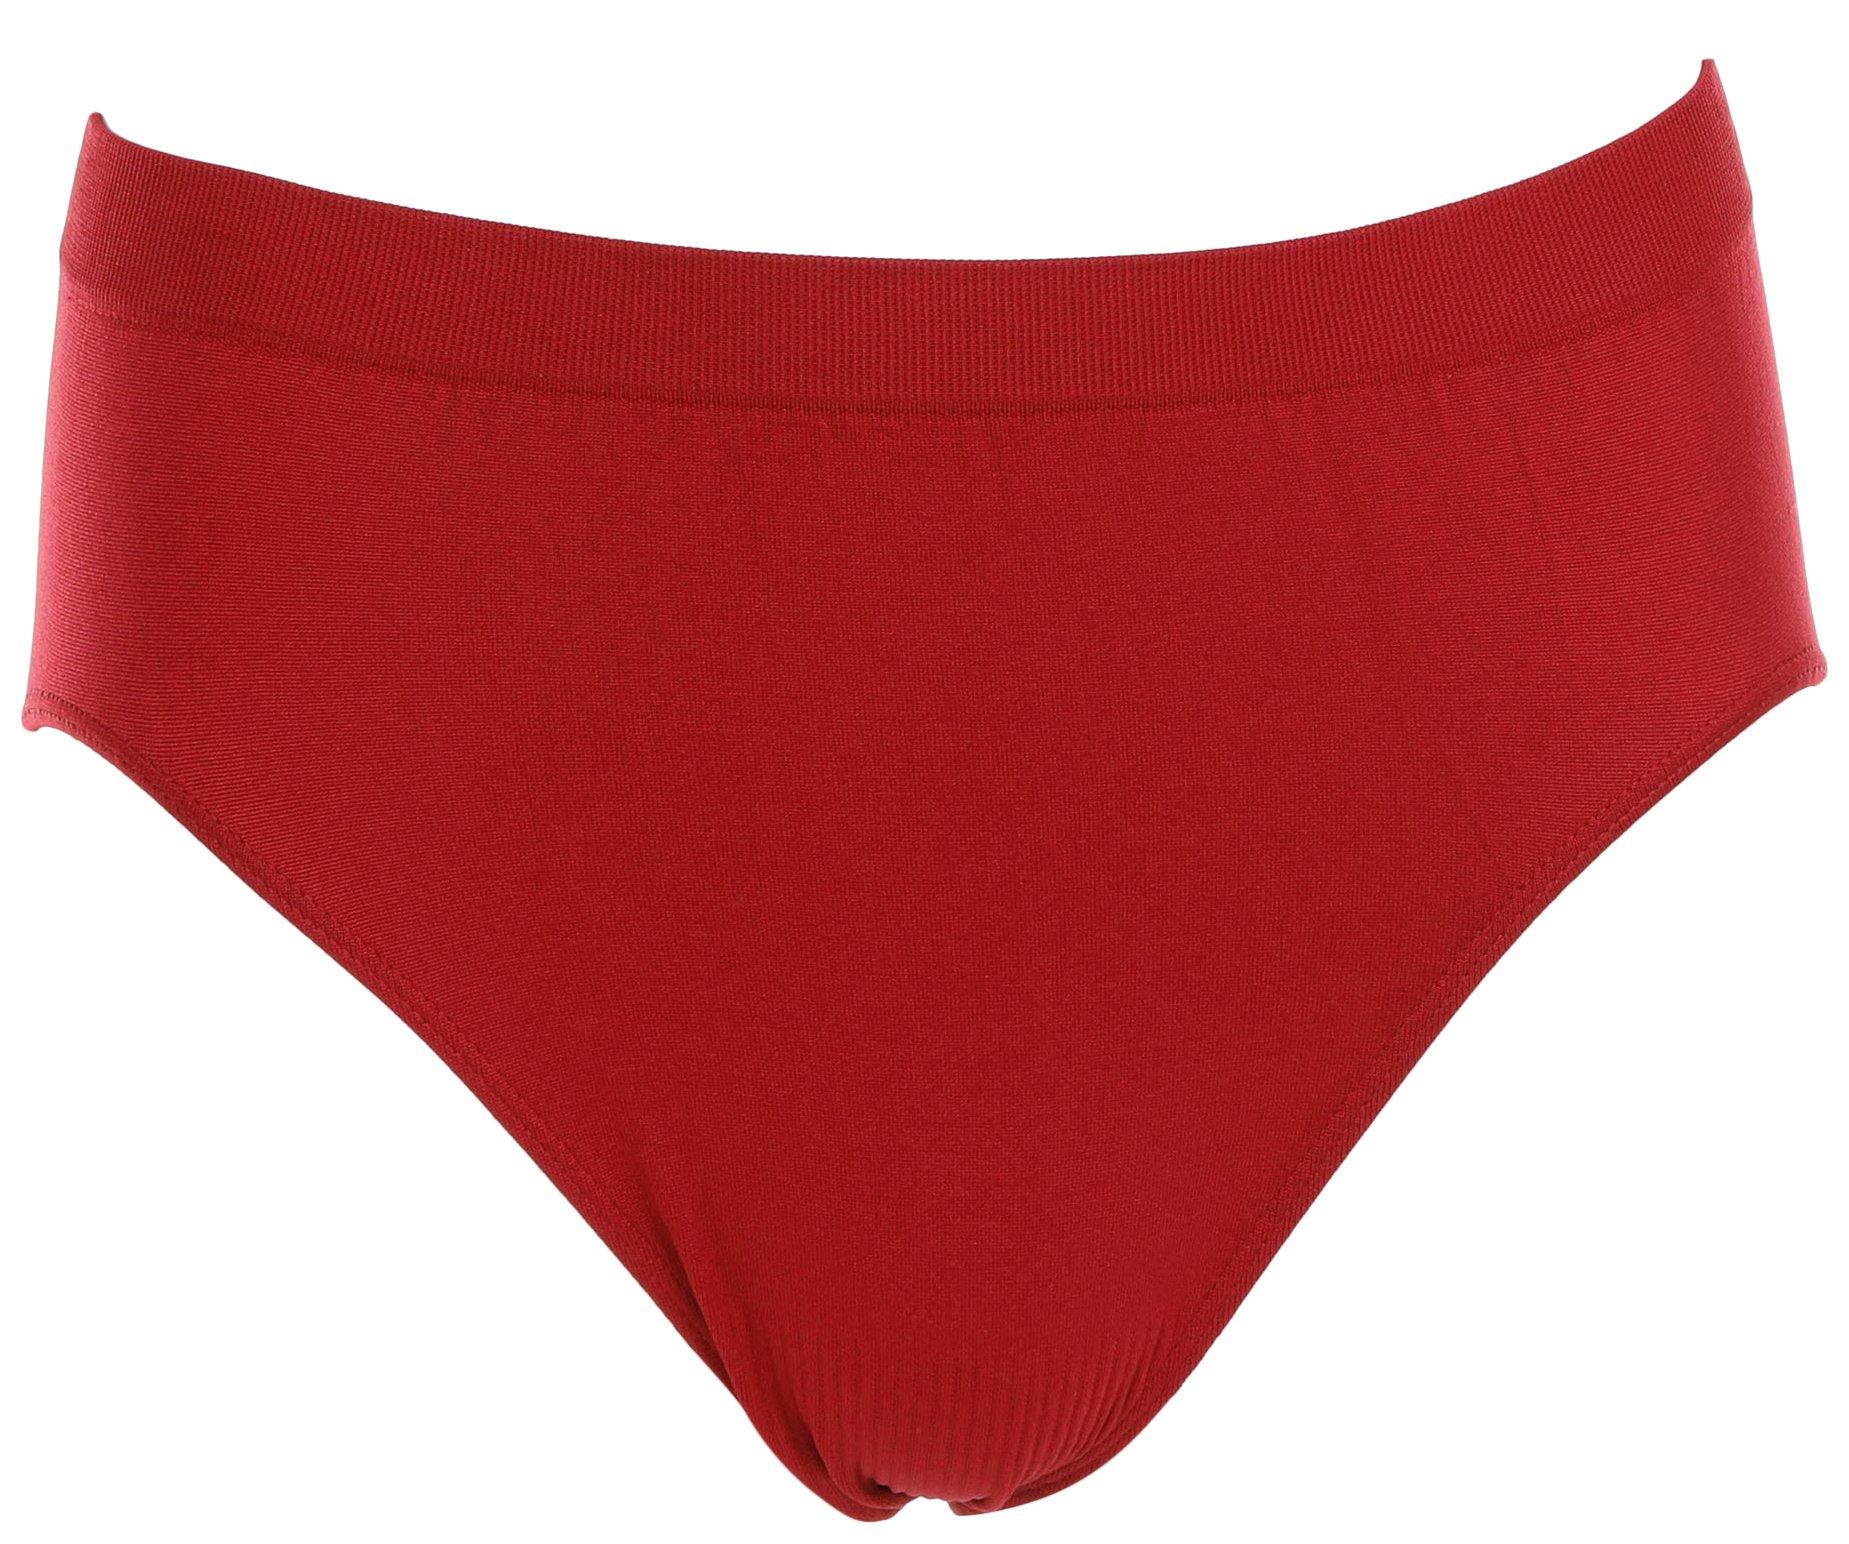 Jockey Elance Super Soft French Cut Underwear 3 Pack 2071 OBLONG